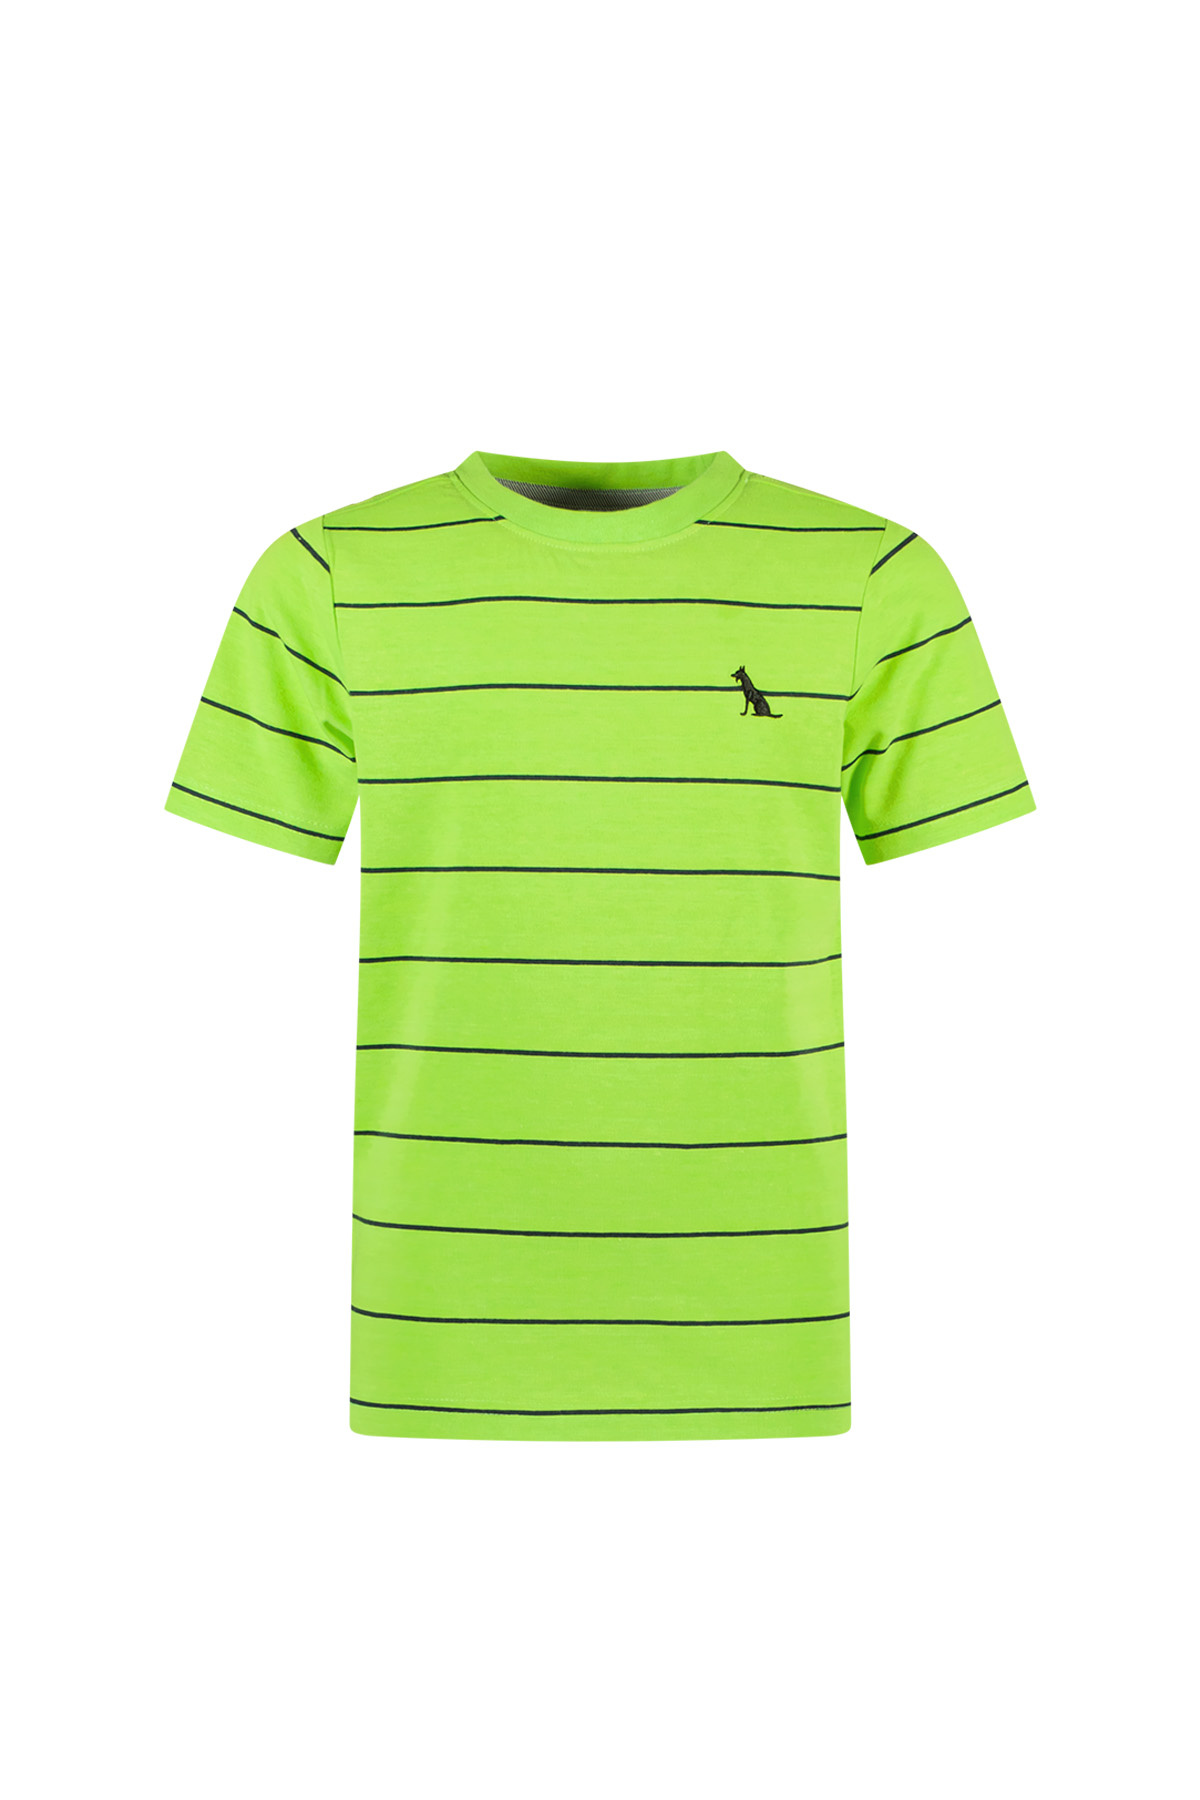 Tygo & Vito Jongens t-shirt - Jack - Groen gecko